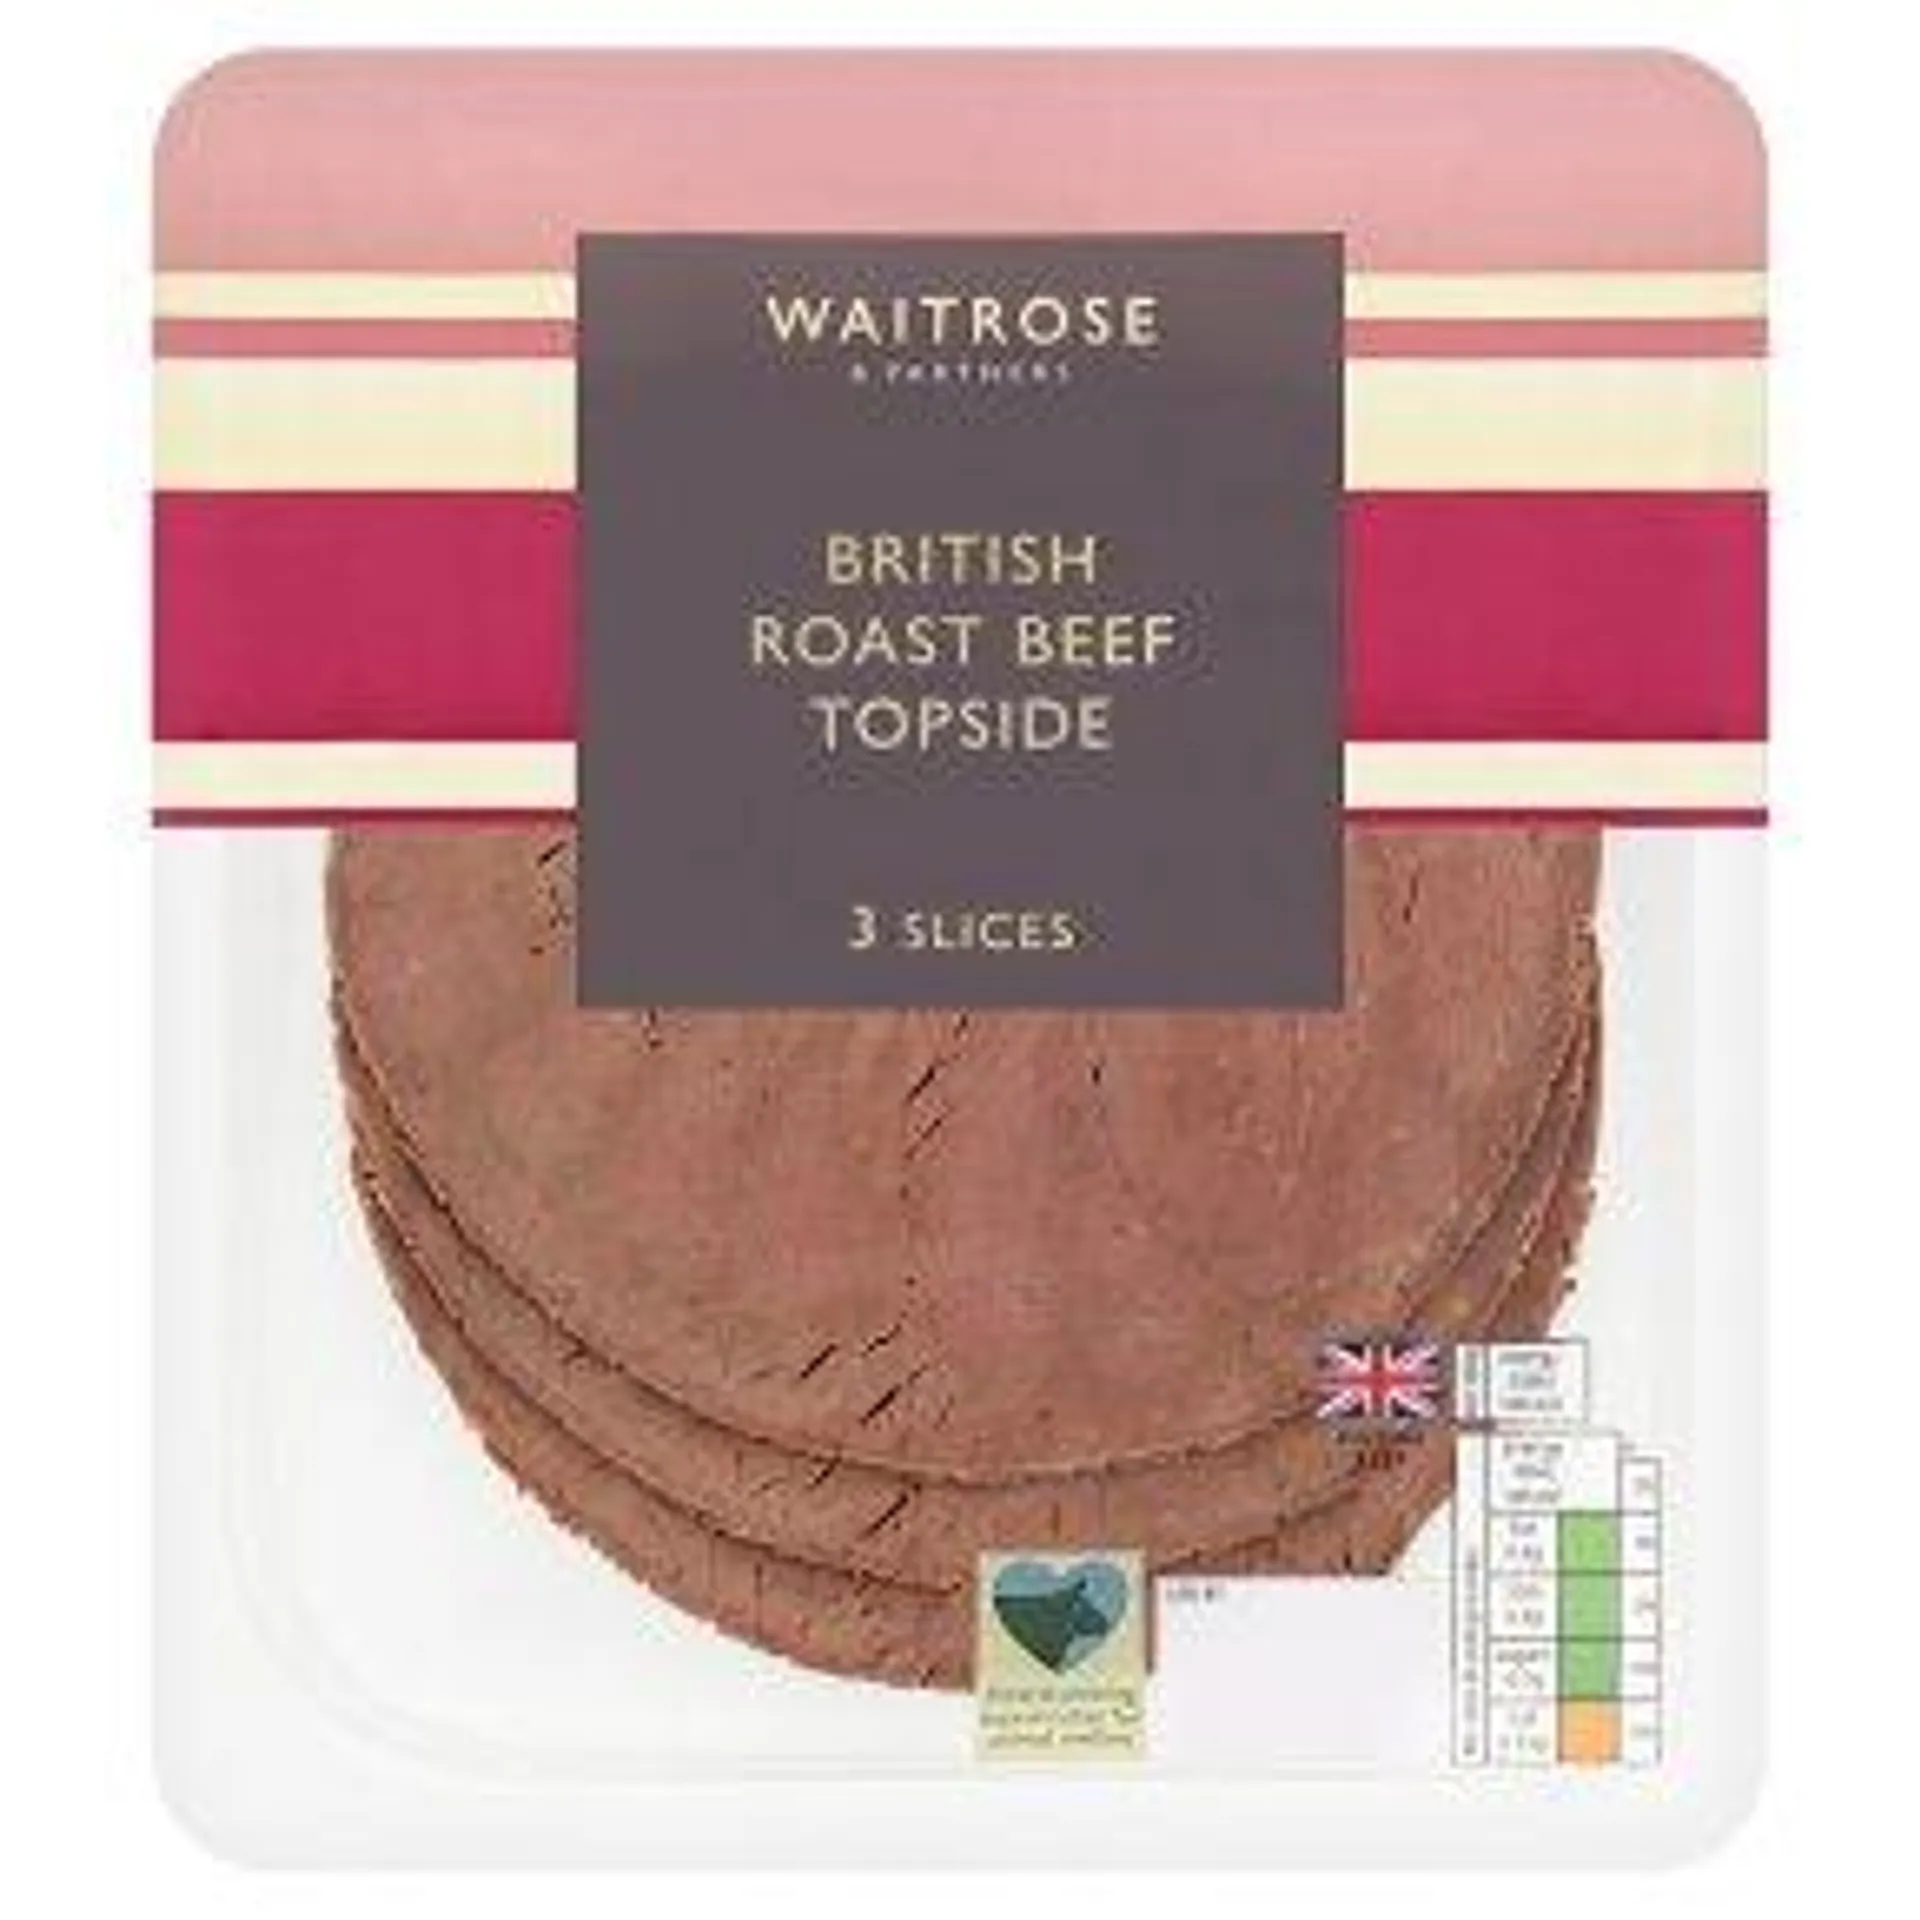 Waitrose British Roast Beef Topside 3 Slices